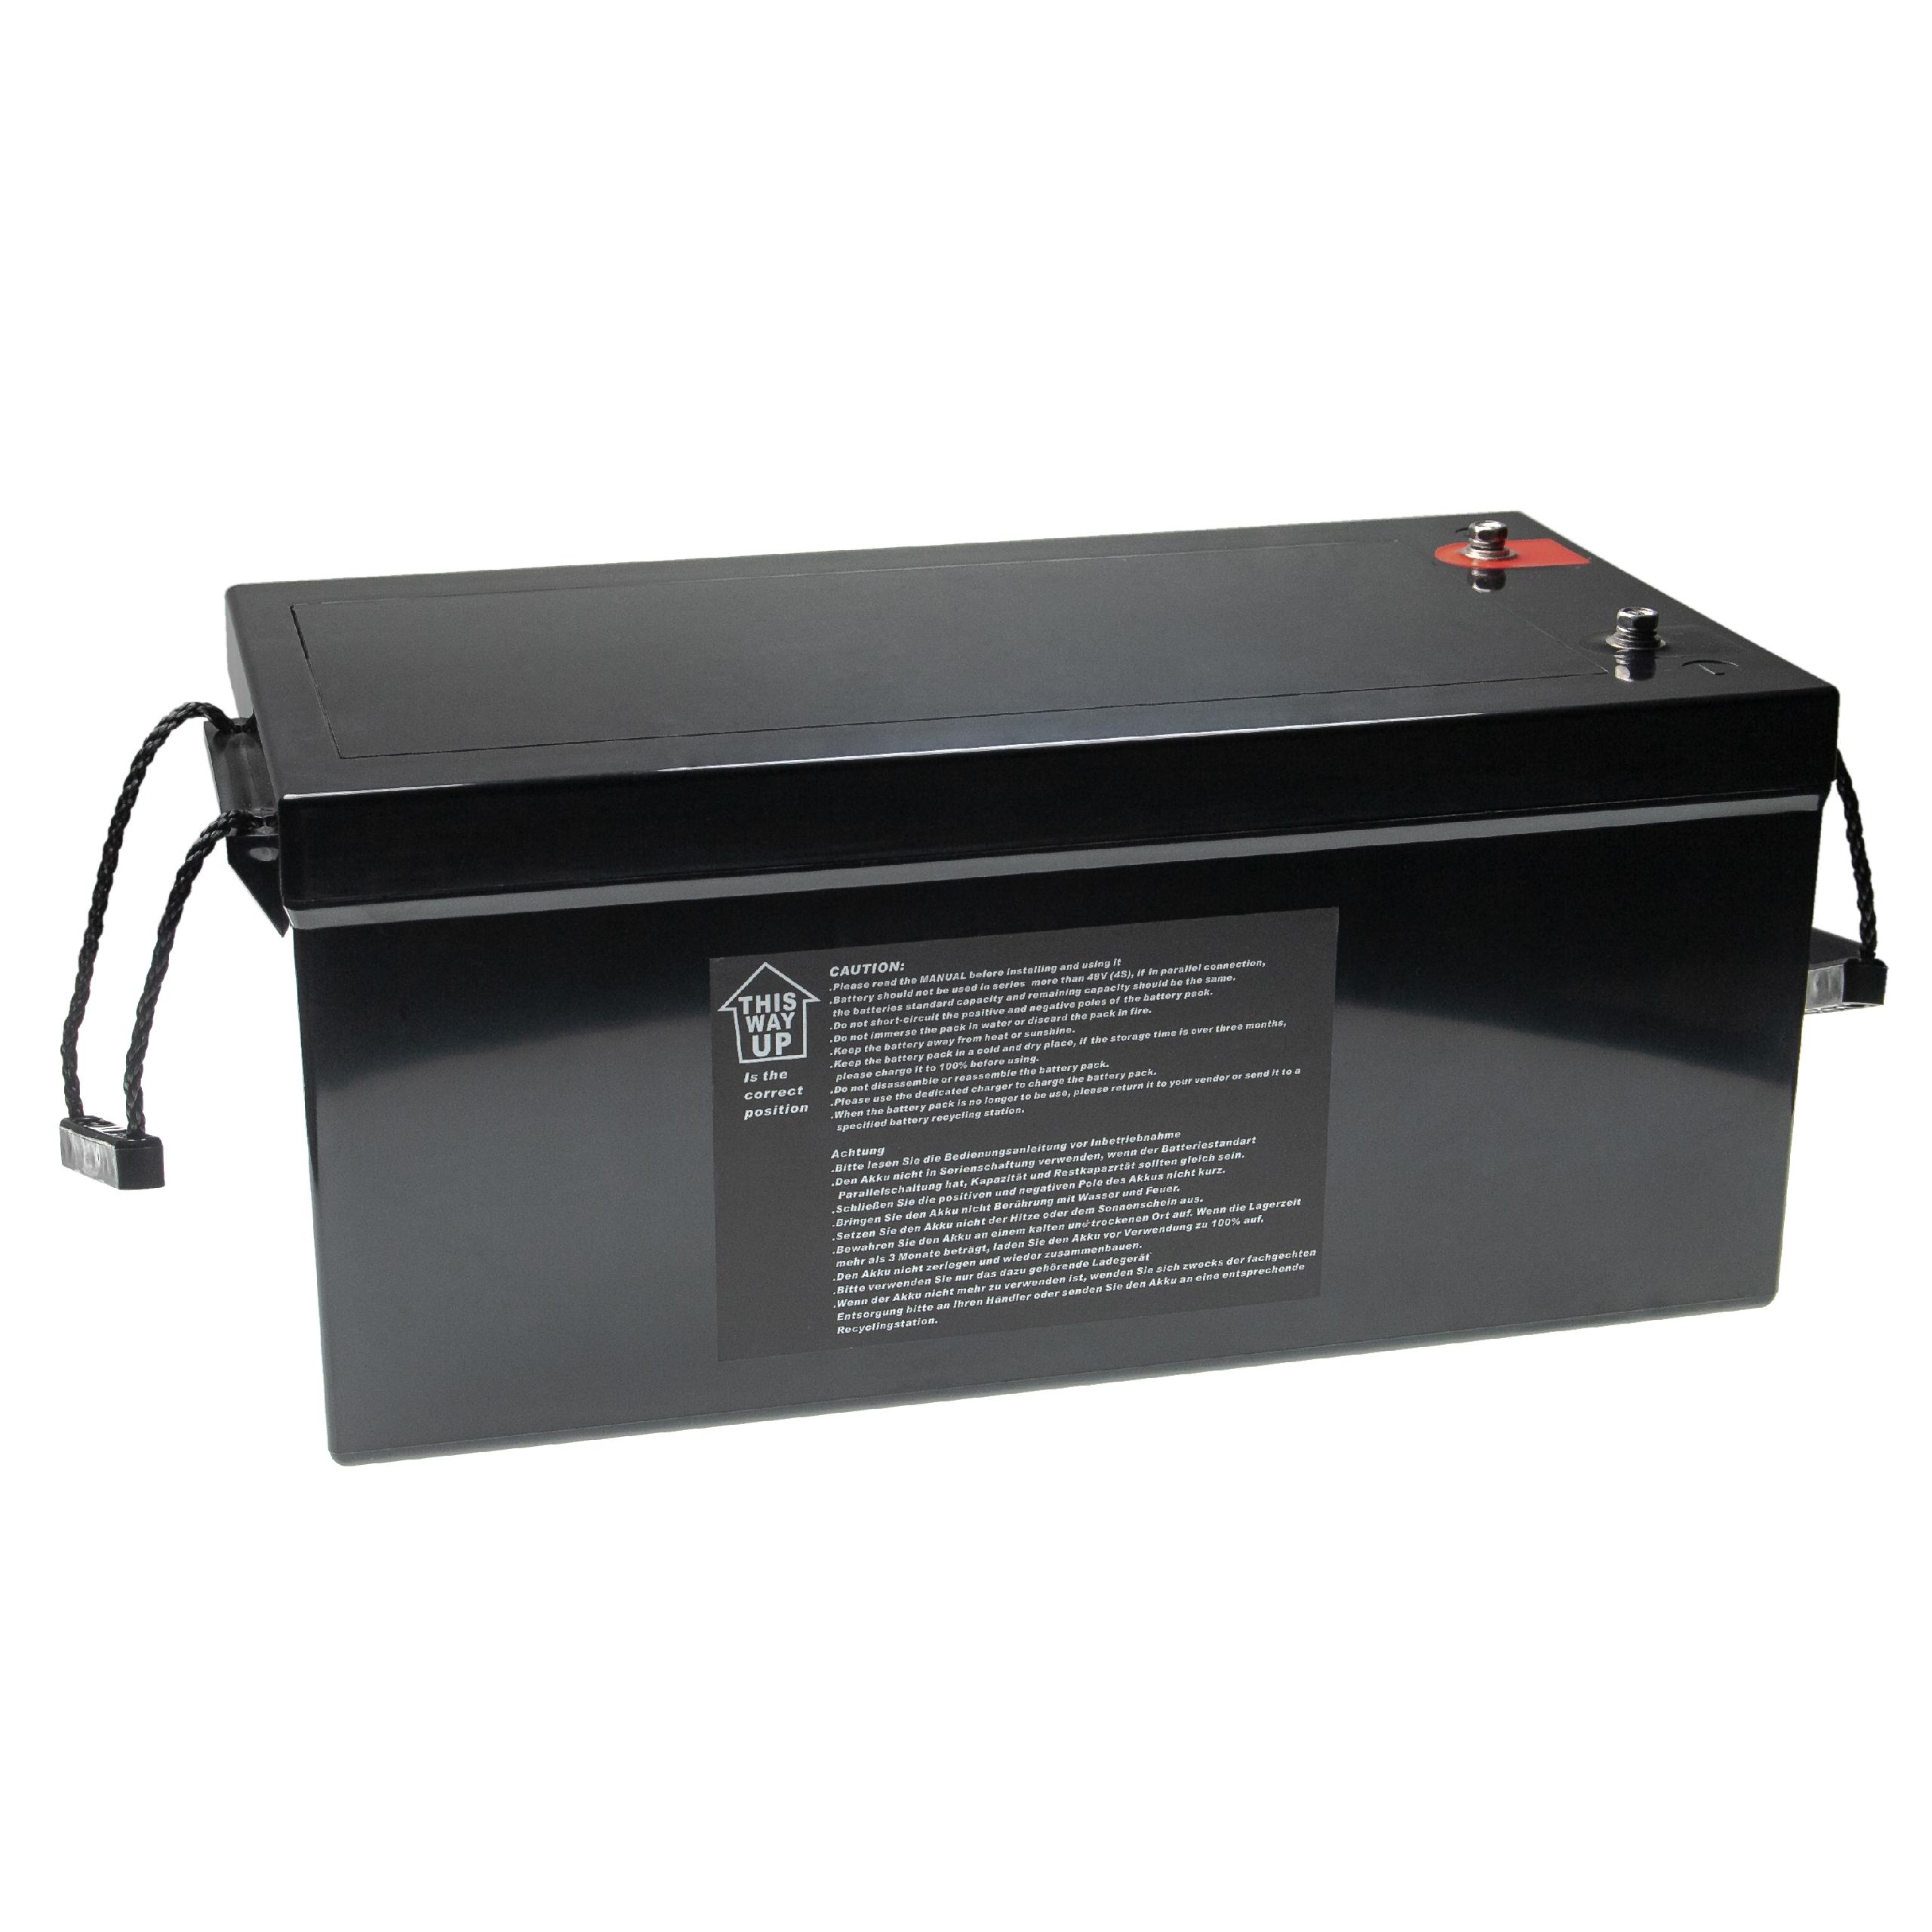 Bordbatterie Akku passend für Wohnmobil, Boot, Solaranlage - 250 Ah 12,8V LiFePO4, 250000mAh, ohne Farbe / Int